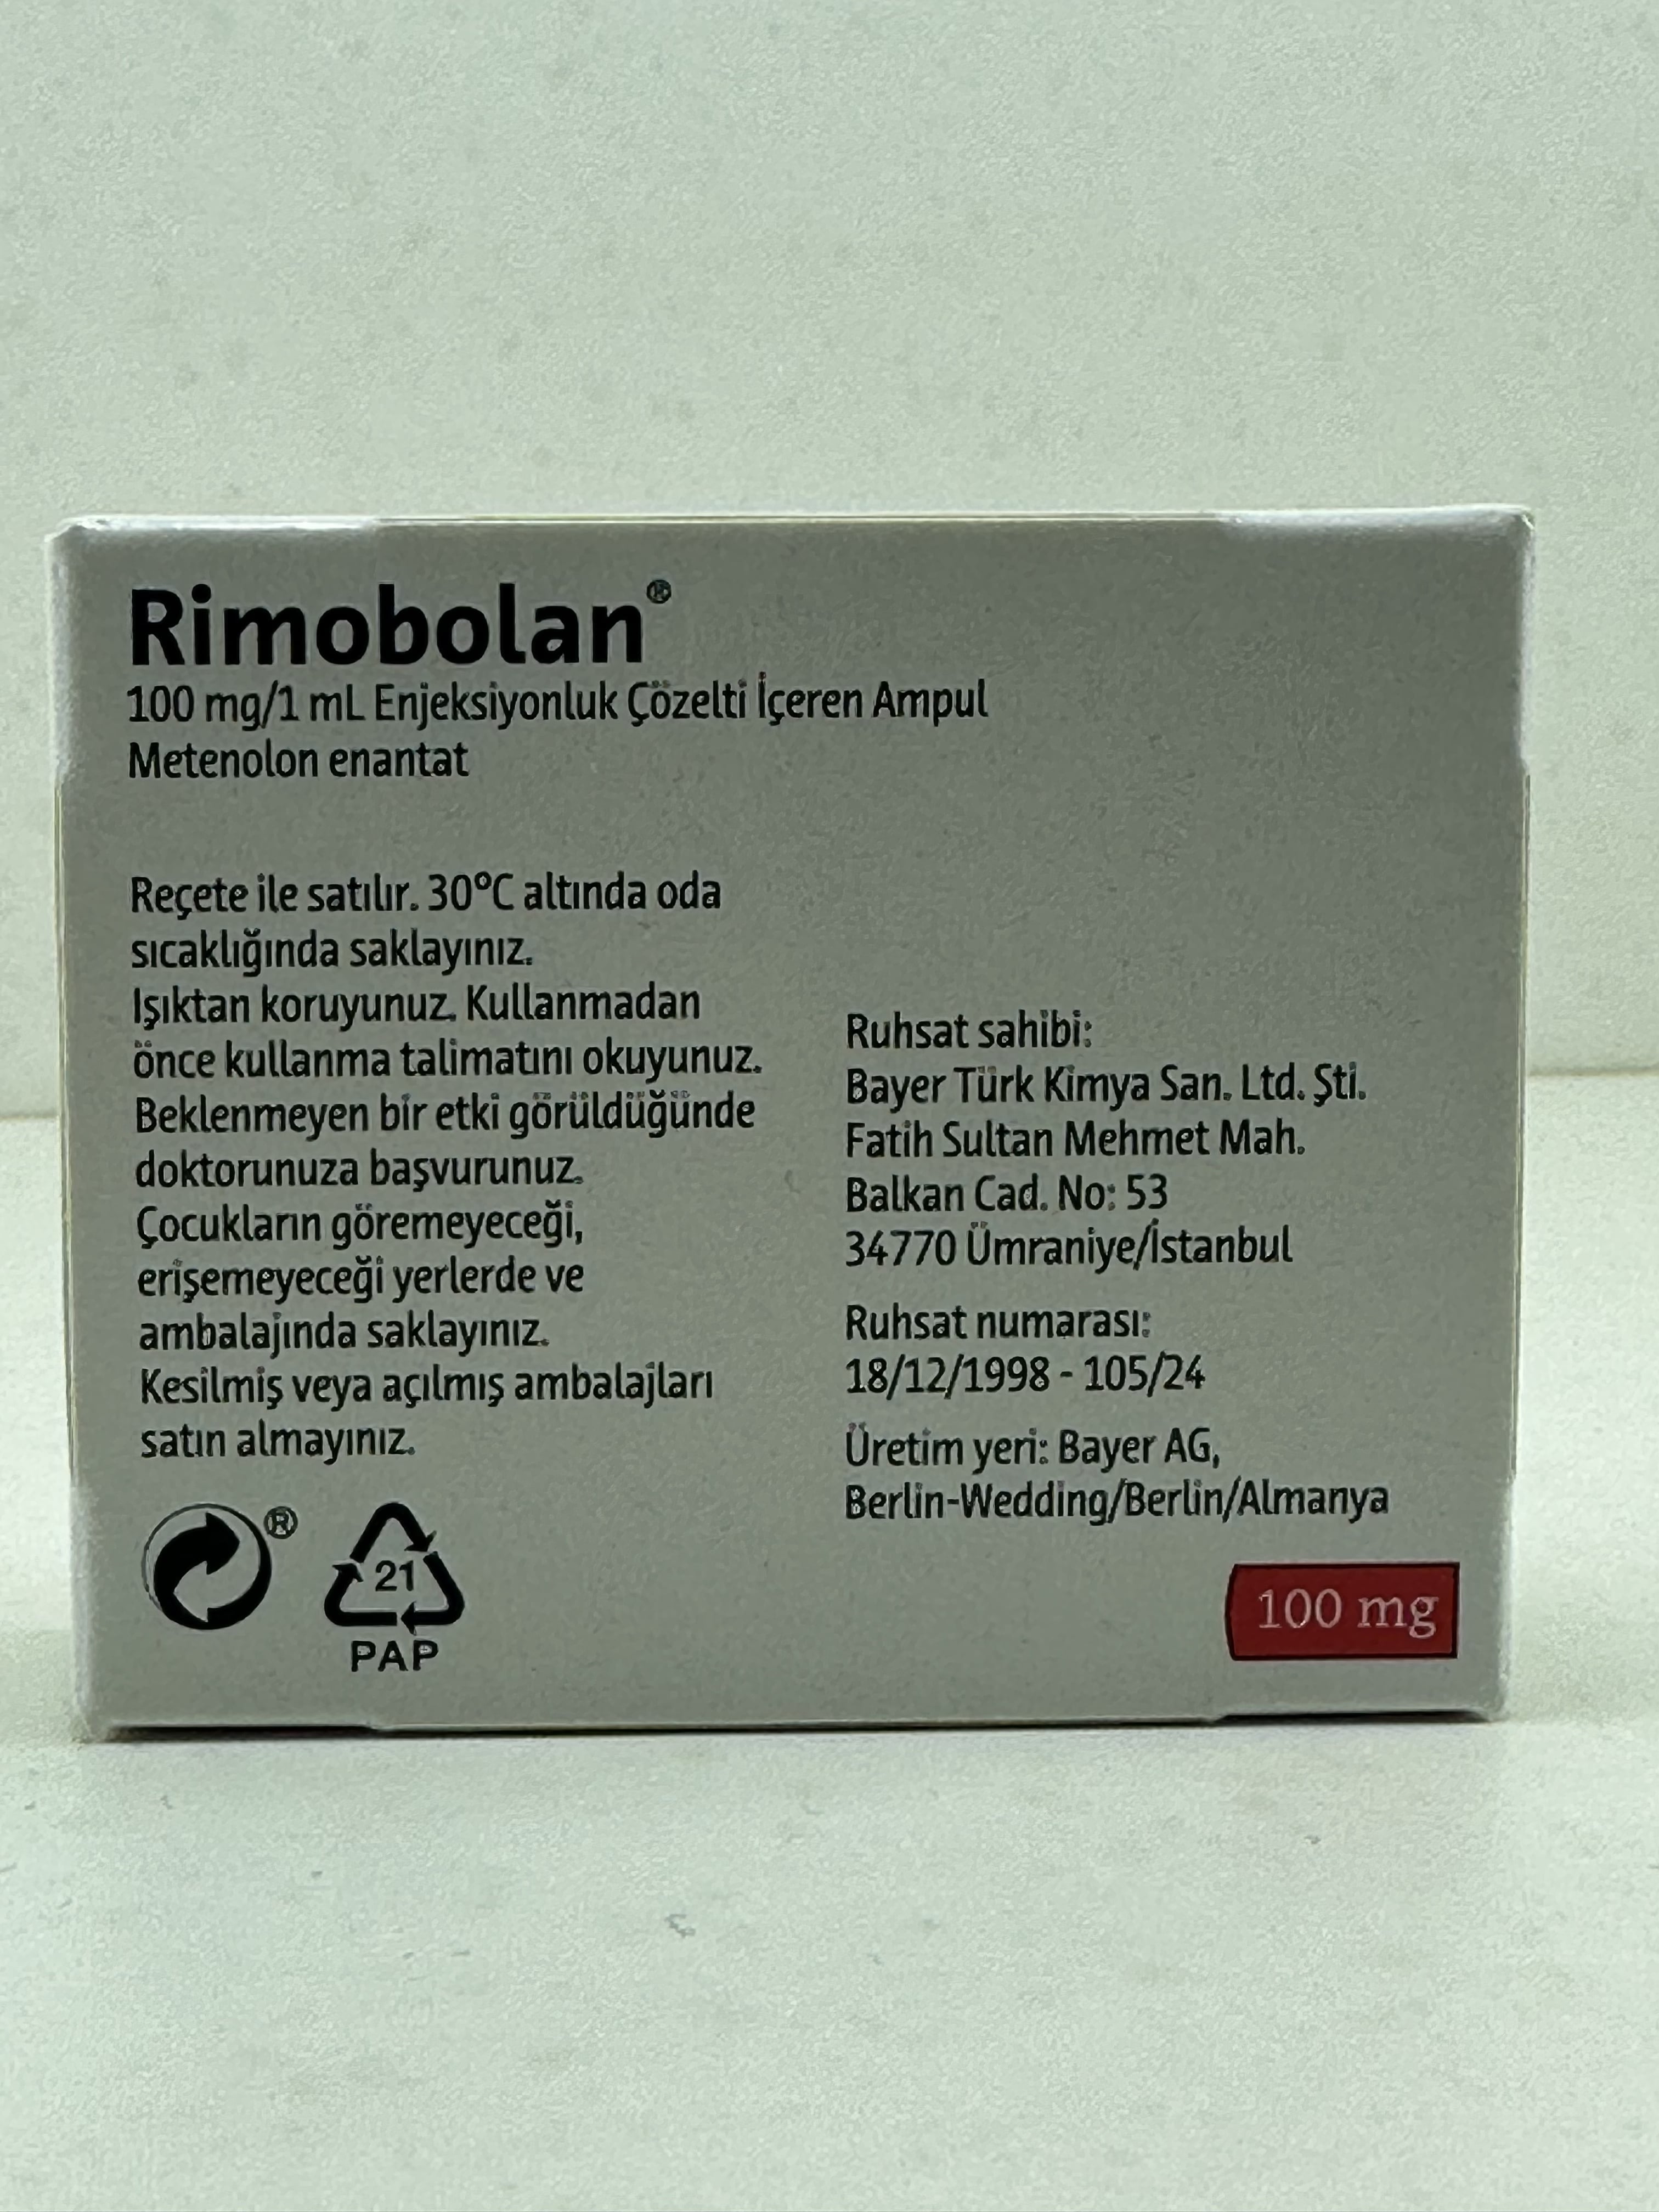 rimobolan amps 100 mg/1 ml 1 amp (methenolone enanthate)